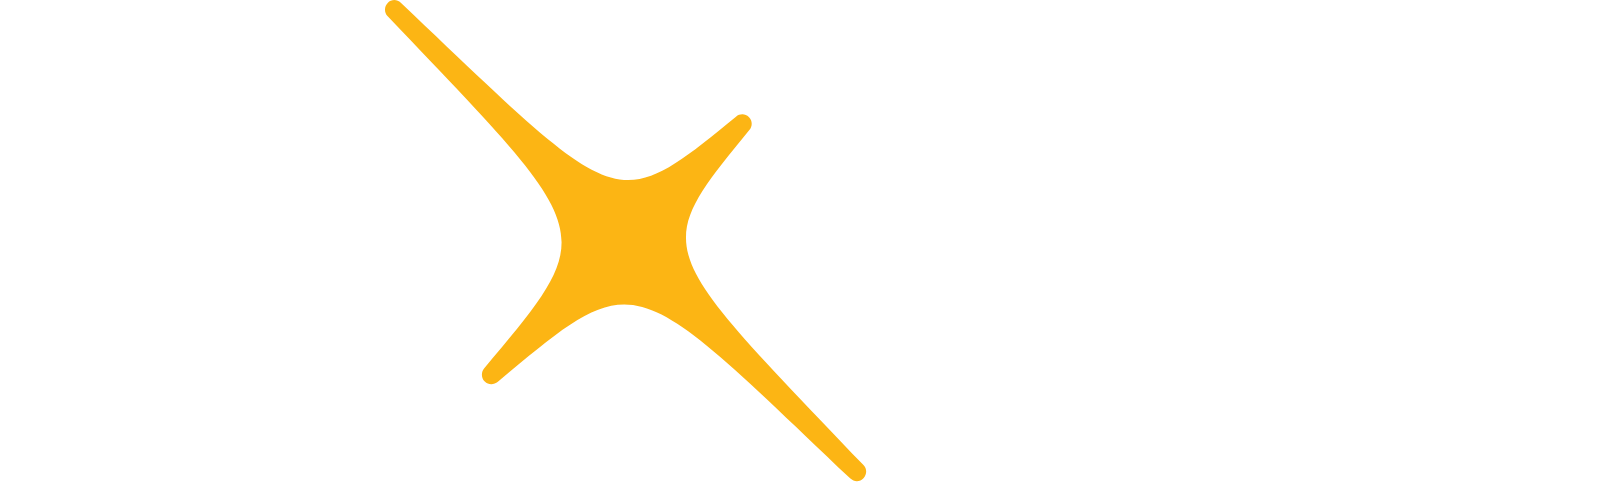 Nexters logo large for dark backgrounds (transparent PNG)